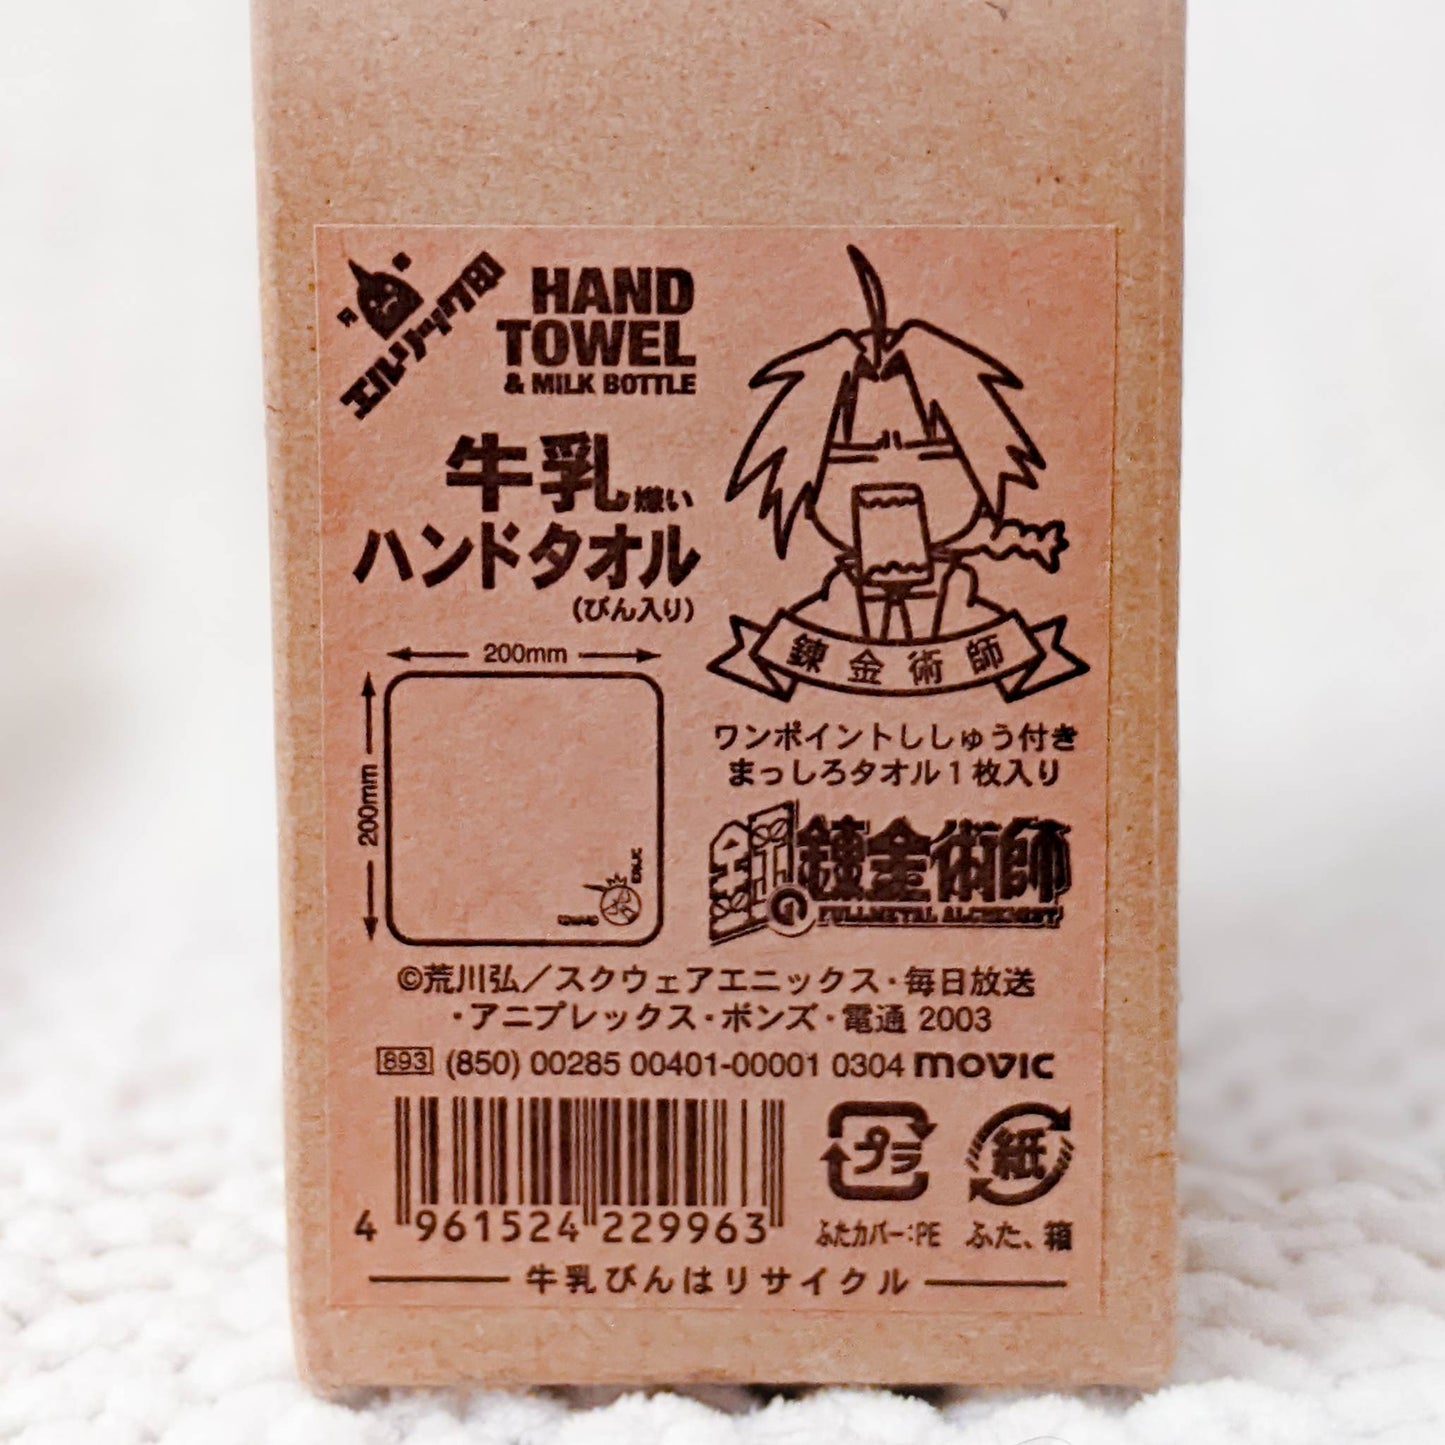 Edward Elric - Fullmetal Alchemist Anime Glass Milk Bottle & Hand Towel